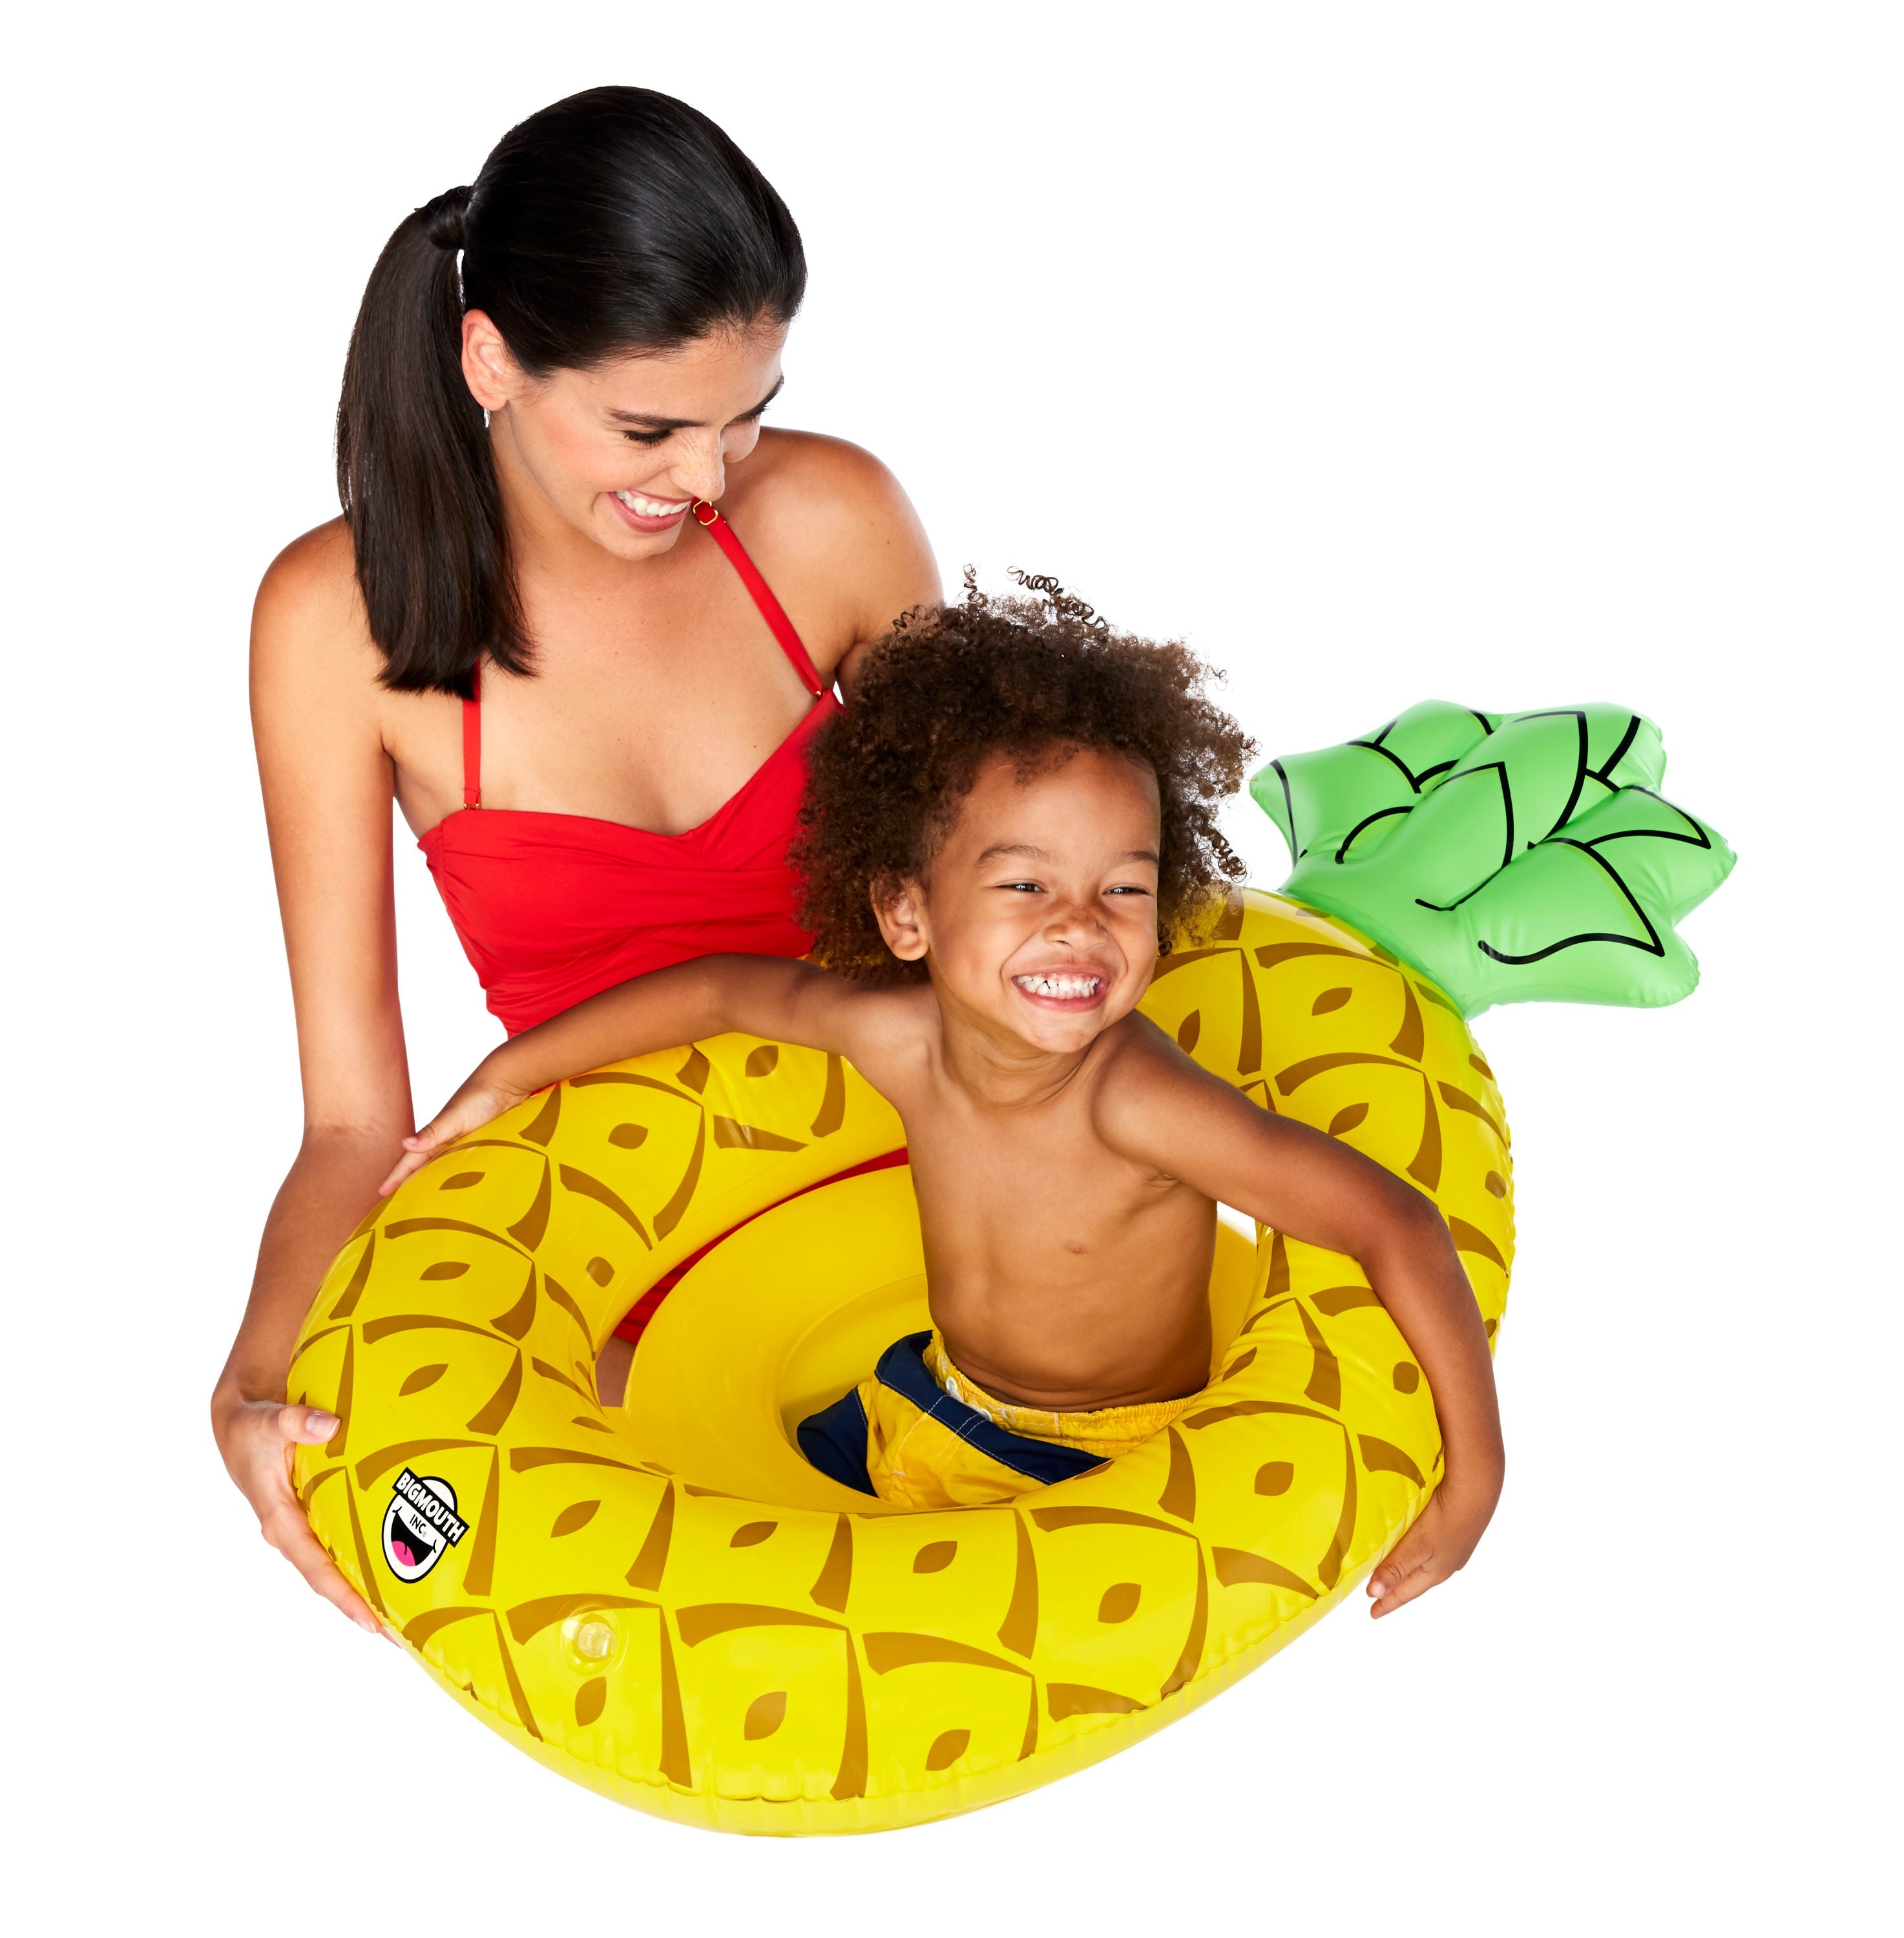 Pineapple Lil' Float